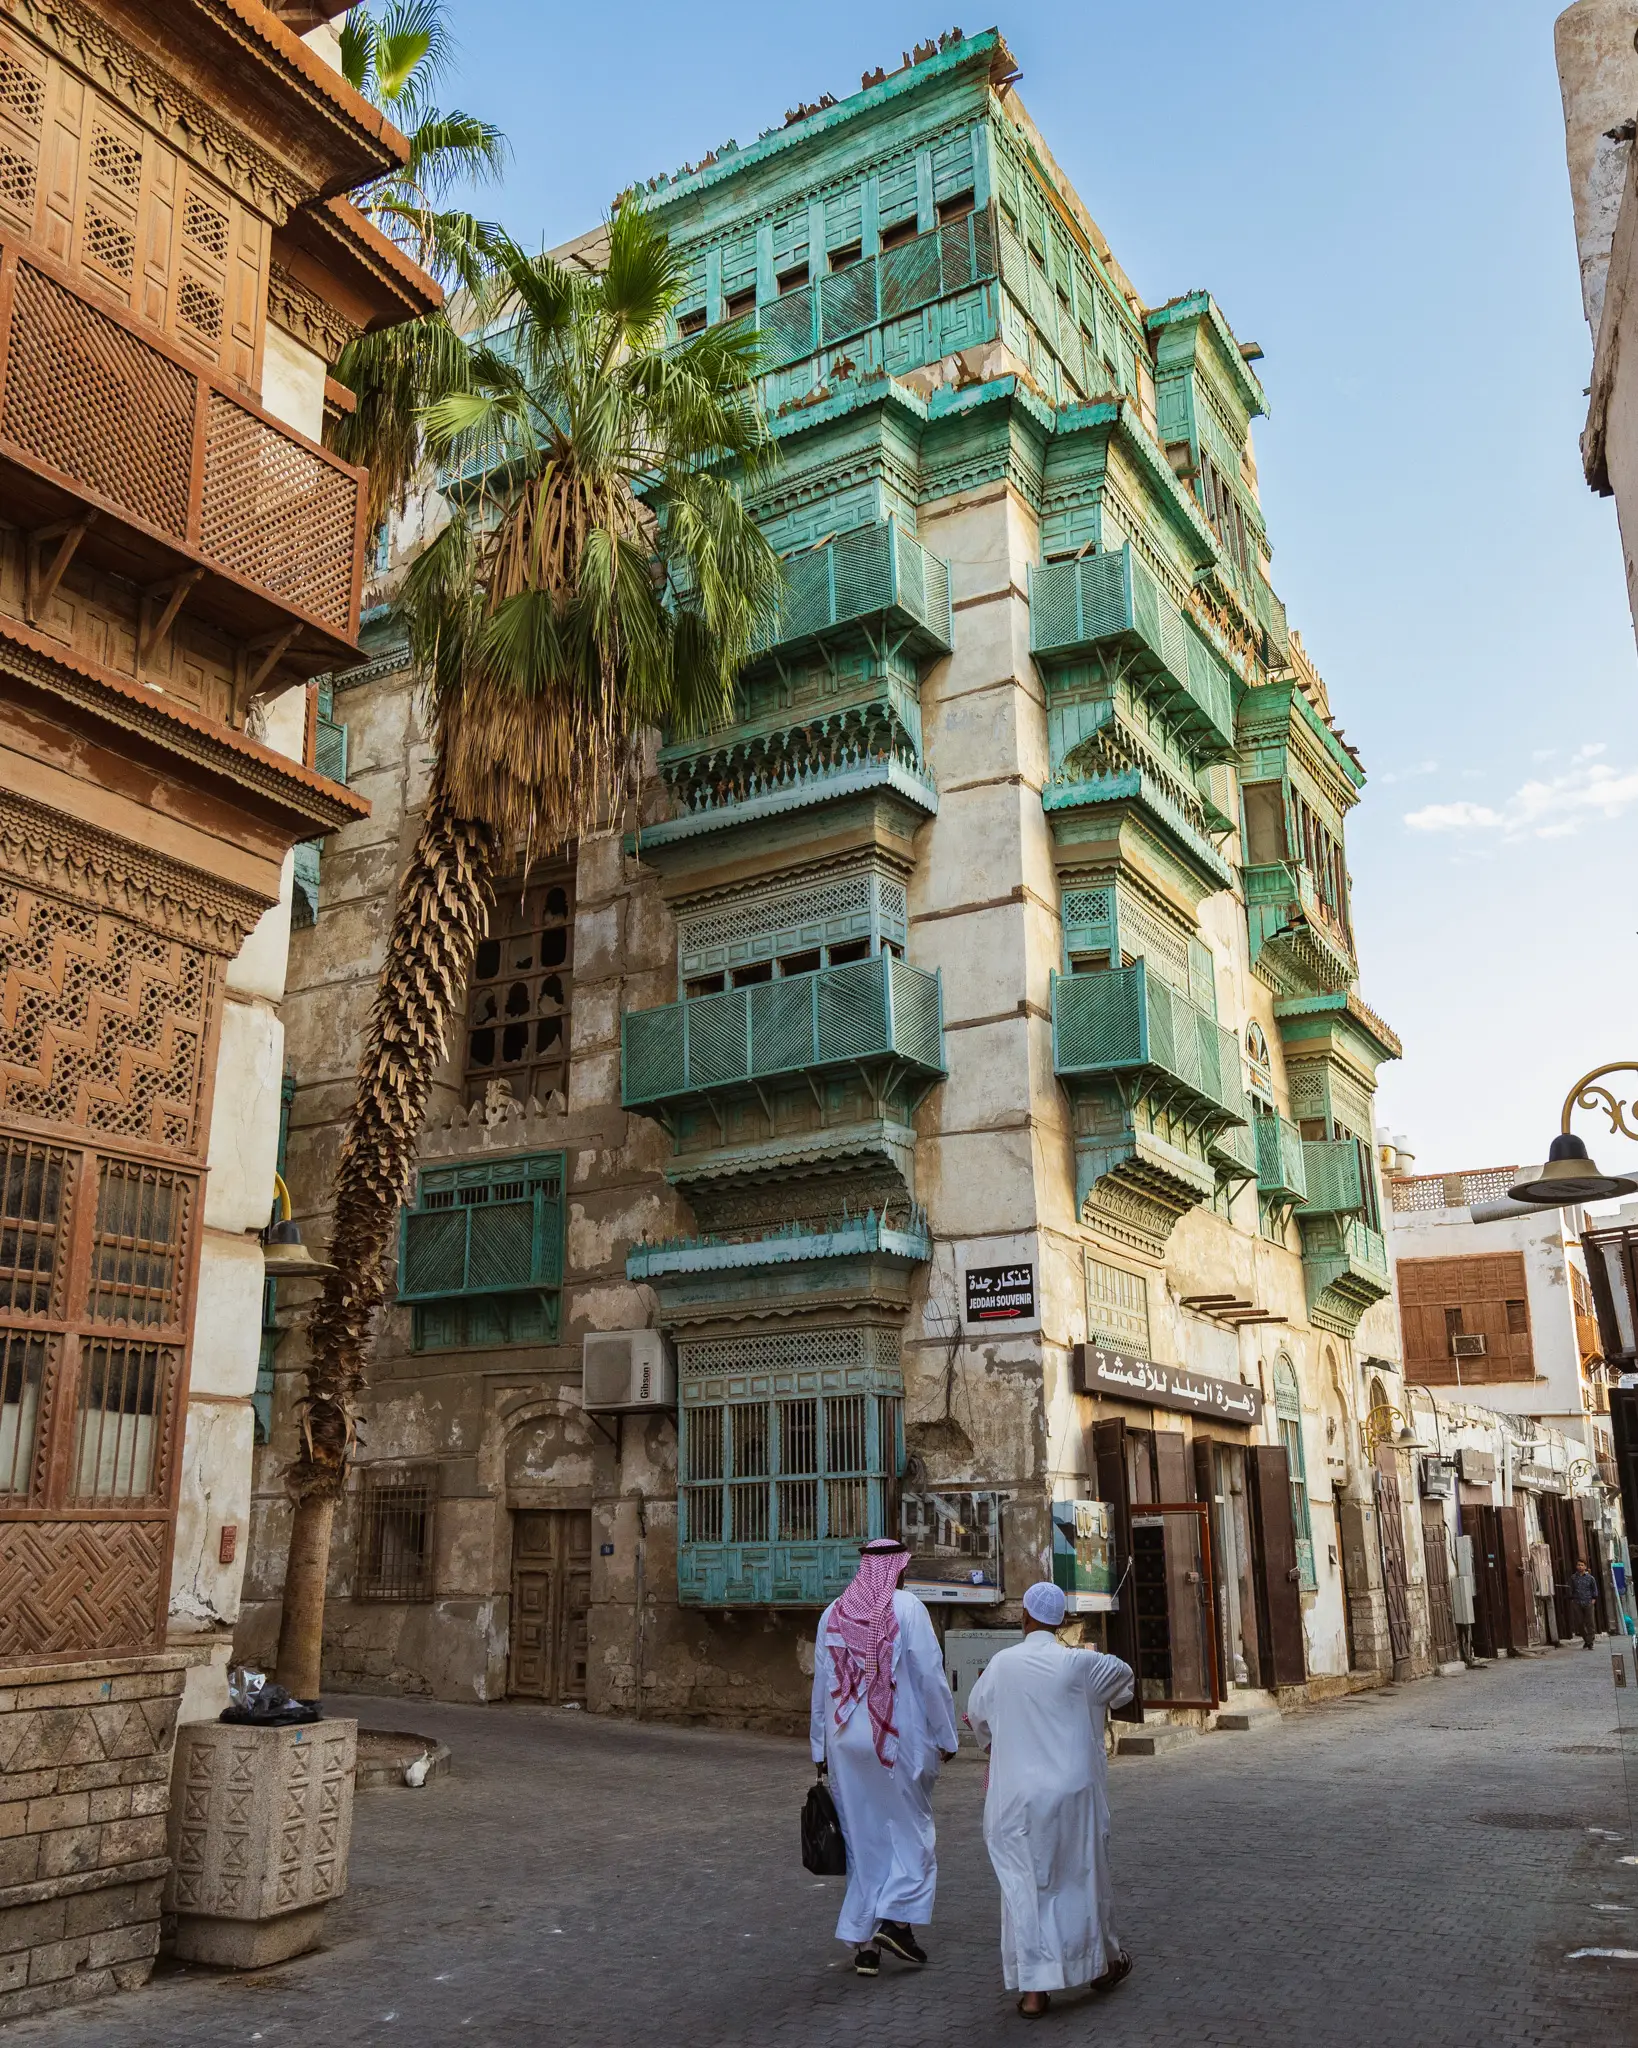 Wandering around Al-Balad district in Jeddah